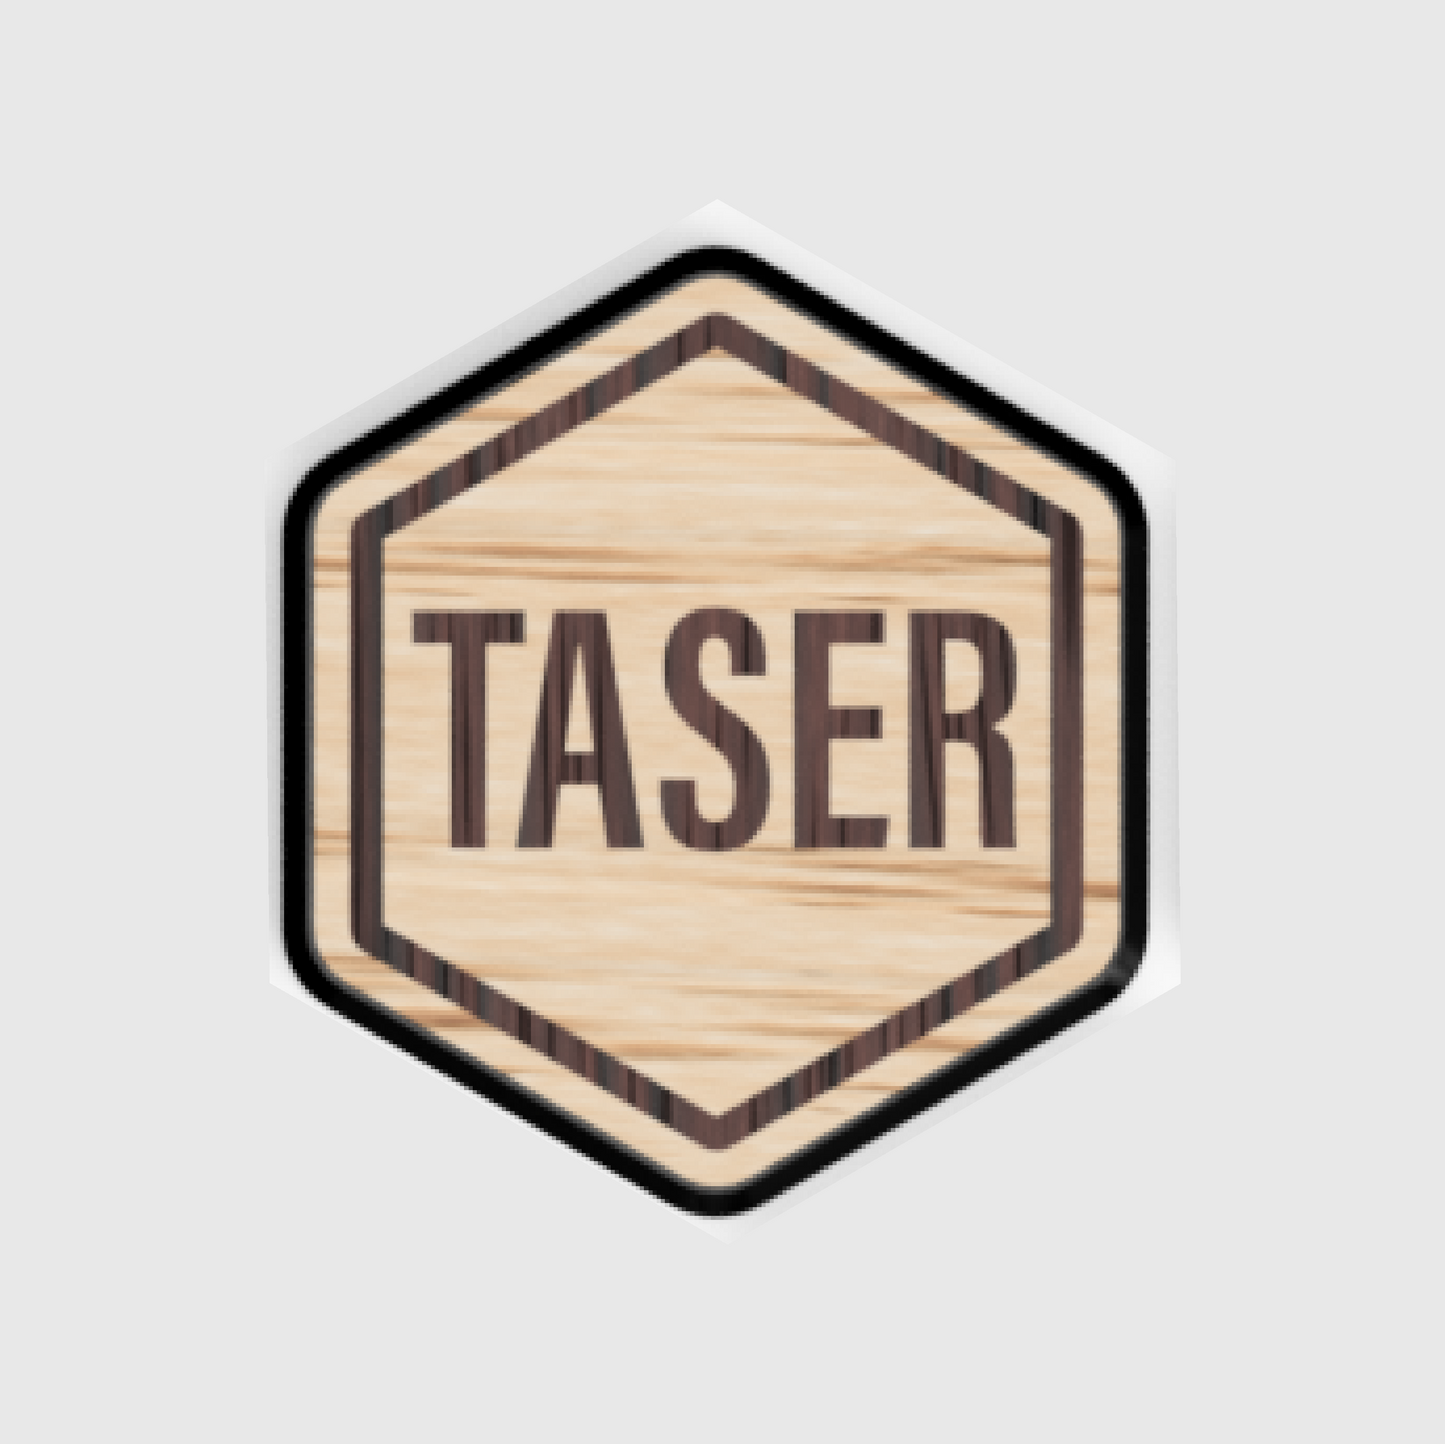 Taser Text Wooden Hex Patch - Velcro